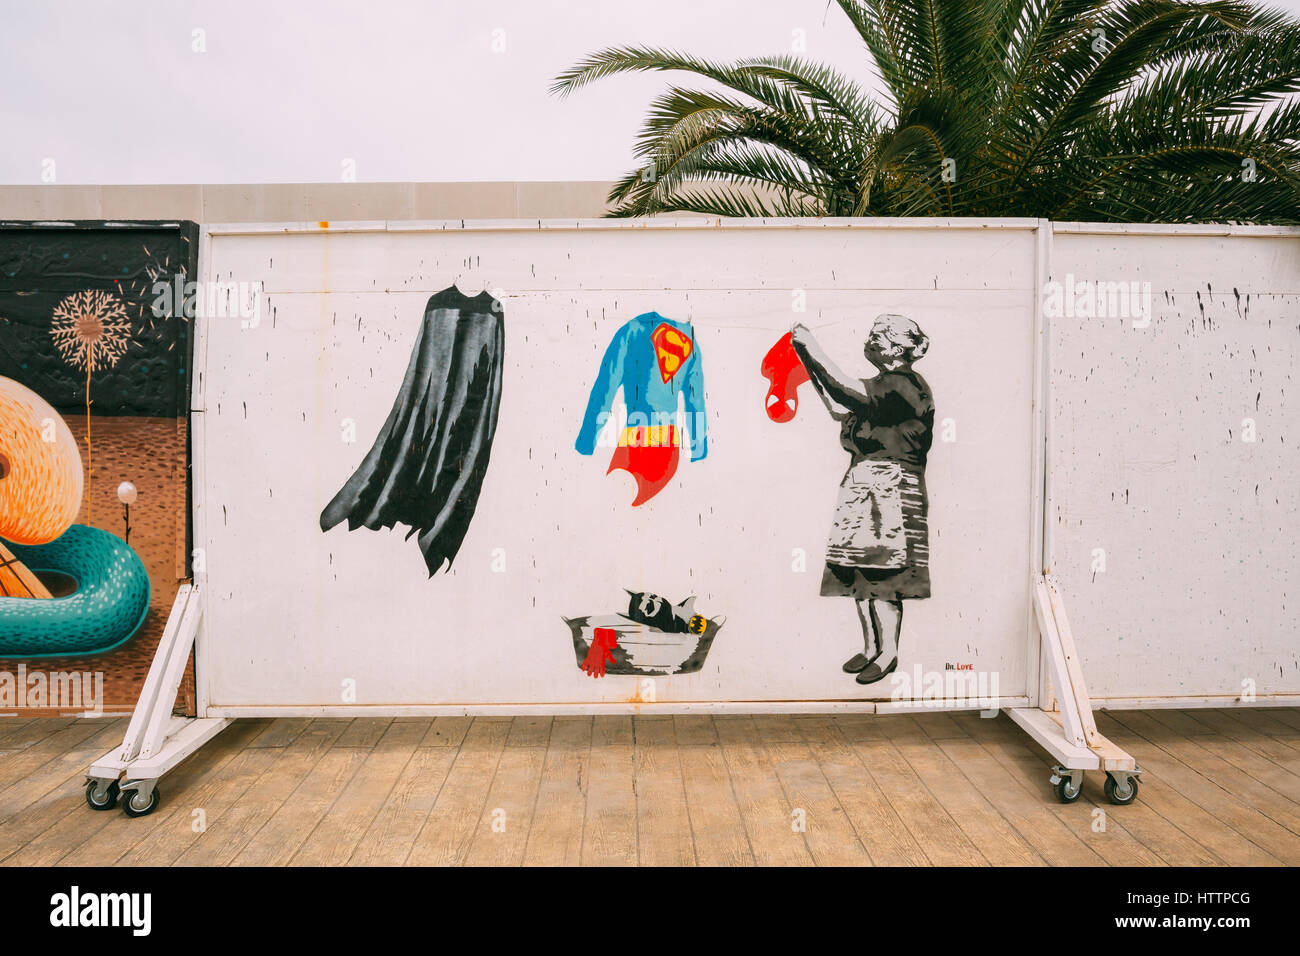 Batumi, Adjara, Georgia. Street graffiti by Dr. Love with Grandmother hanging clothes suits of superheroes - Batman's raincoat, Superman's clothes and Stock Photo